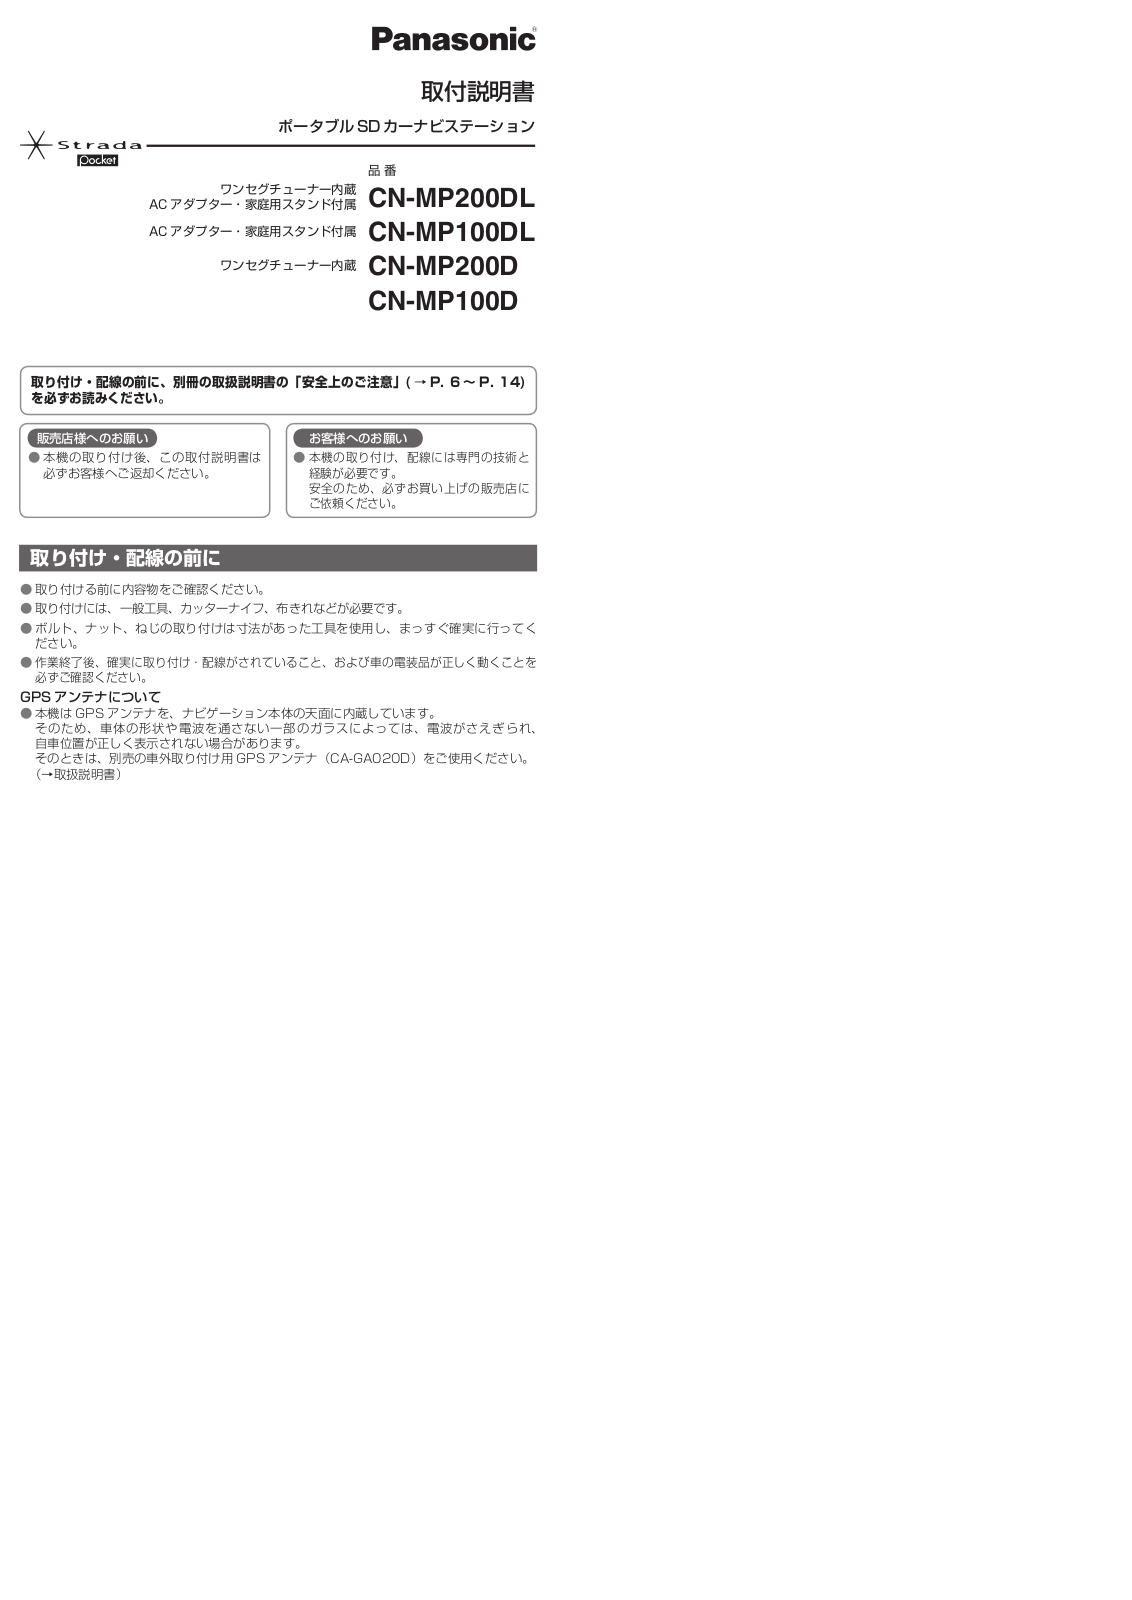 Panasonic CN-MP200DL, CN-MP100DL, CN-MP200D, CN-MP100D User Manual